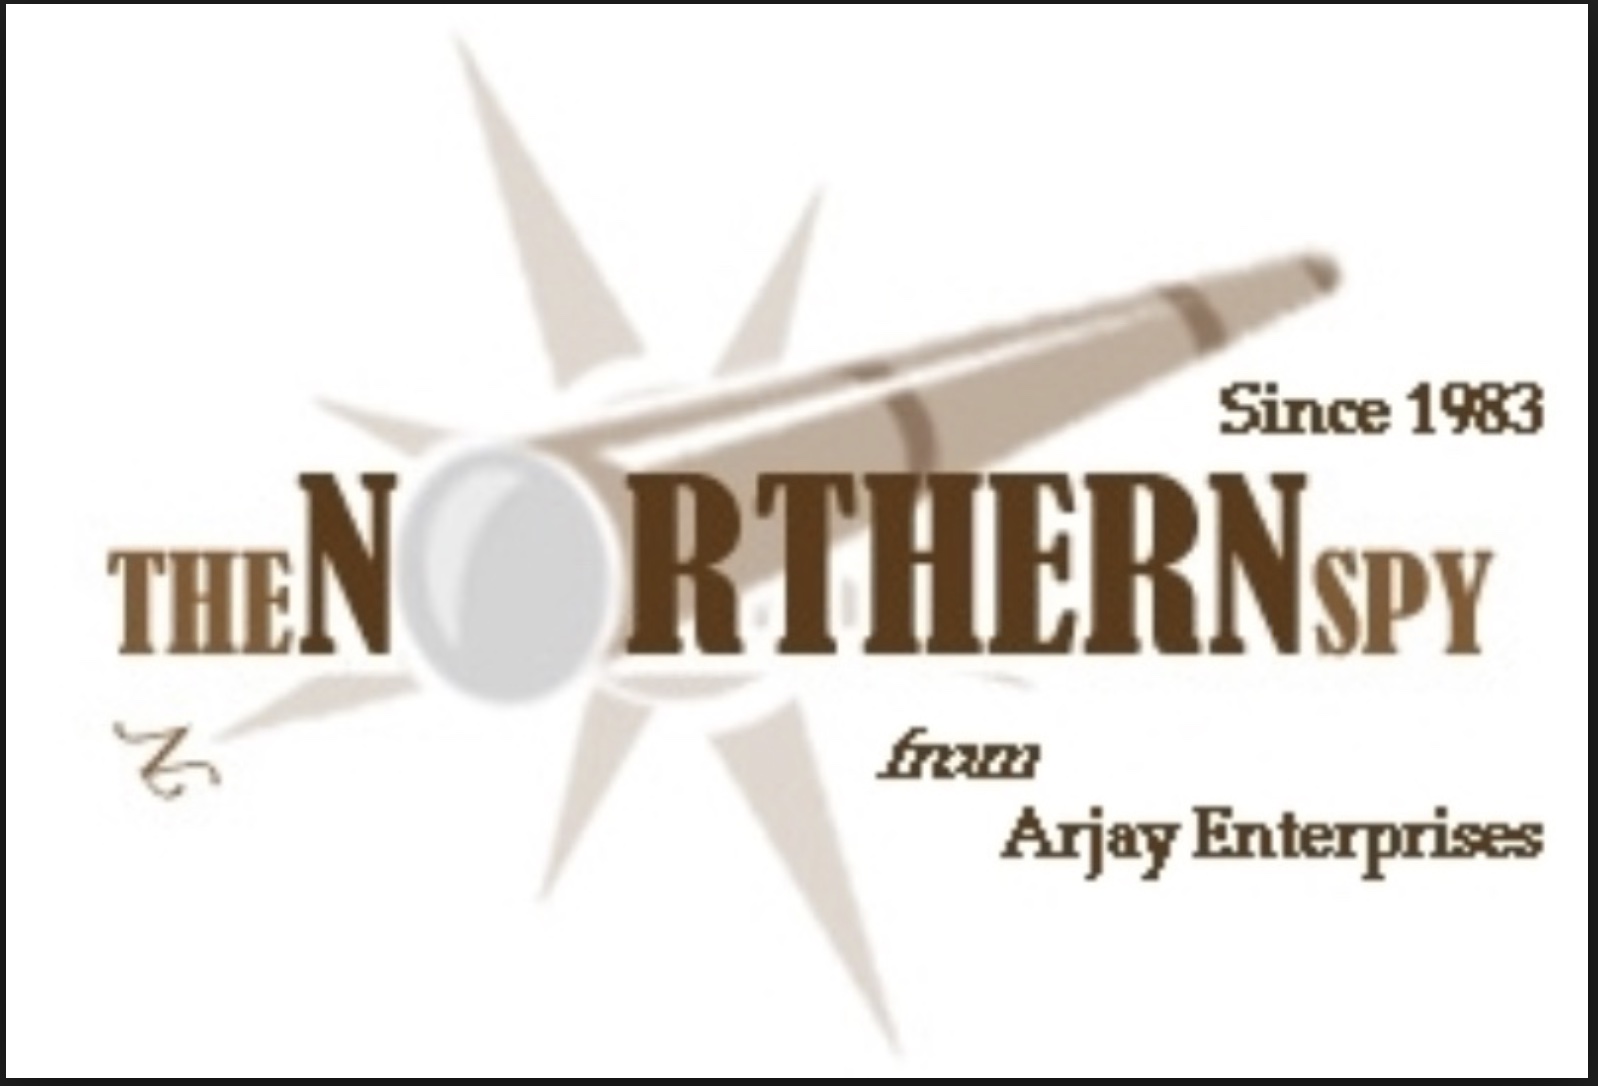 The Northern Spy: Thinking Undifferent